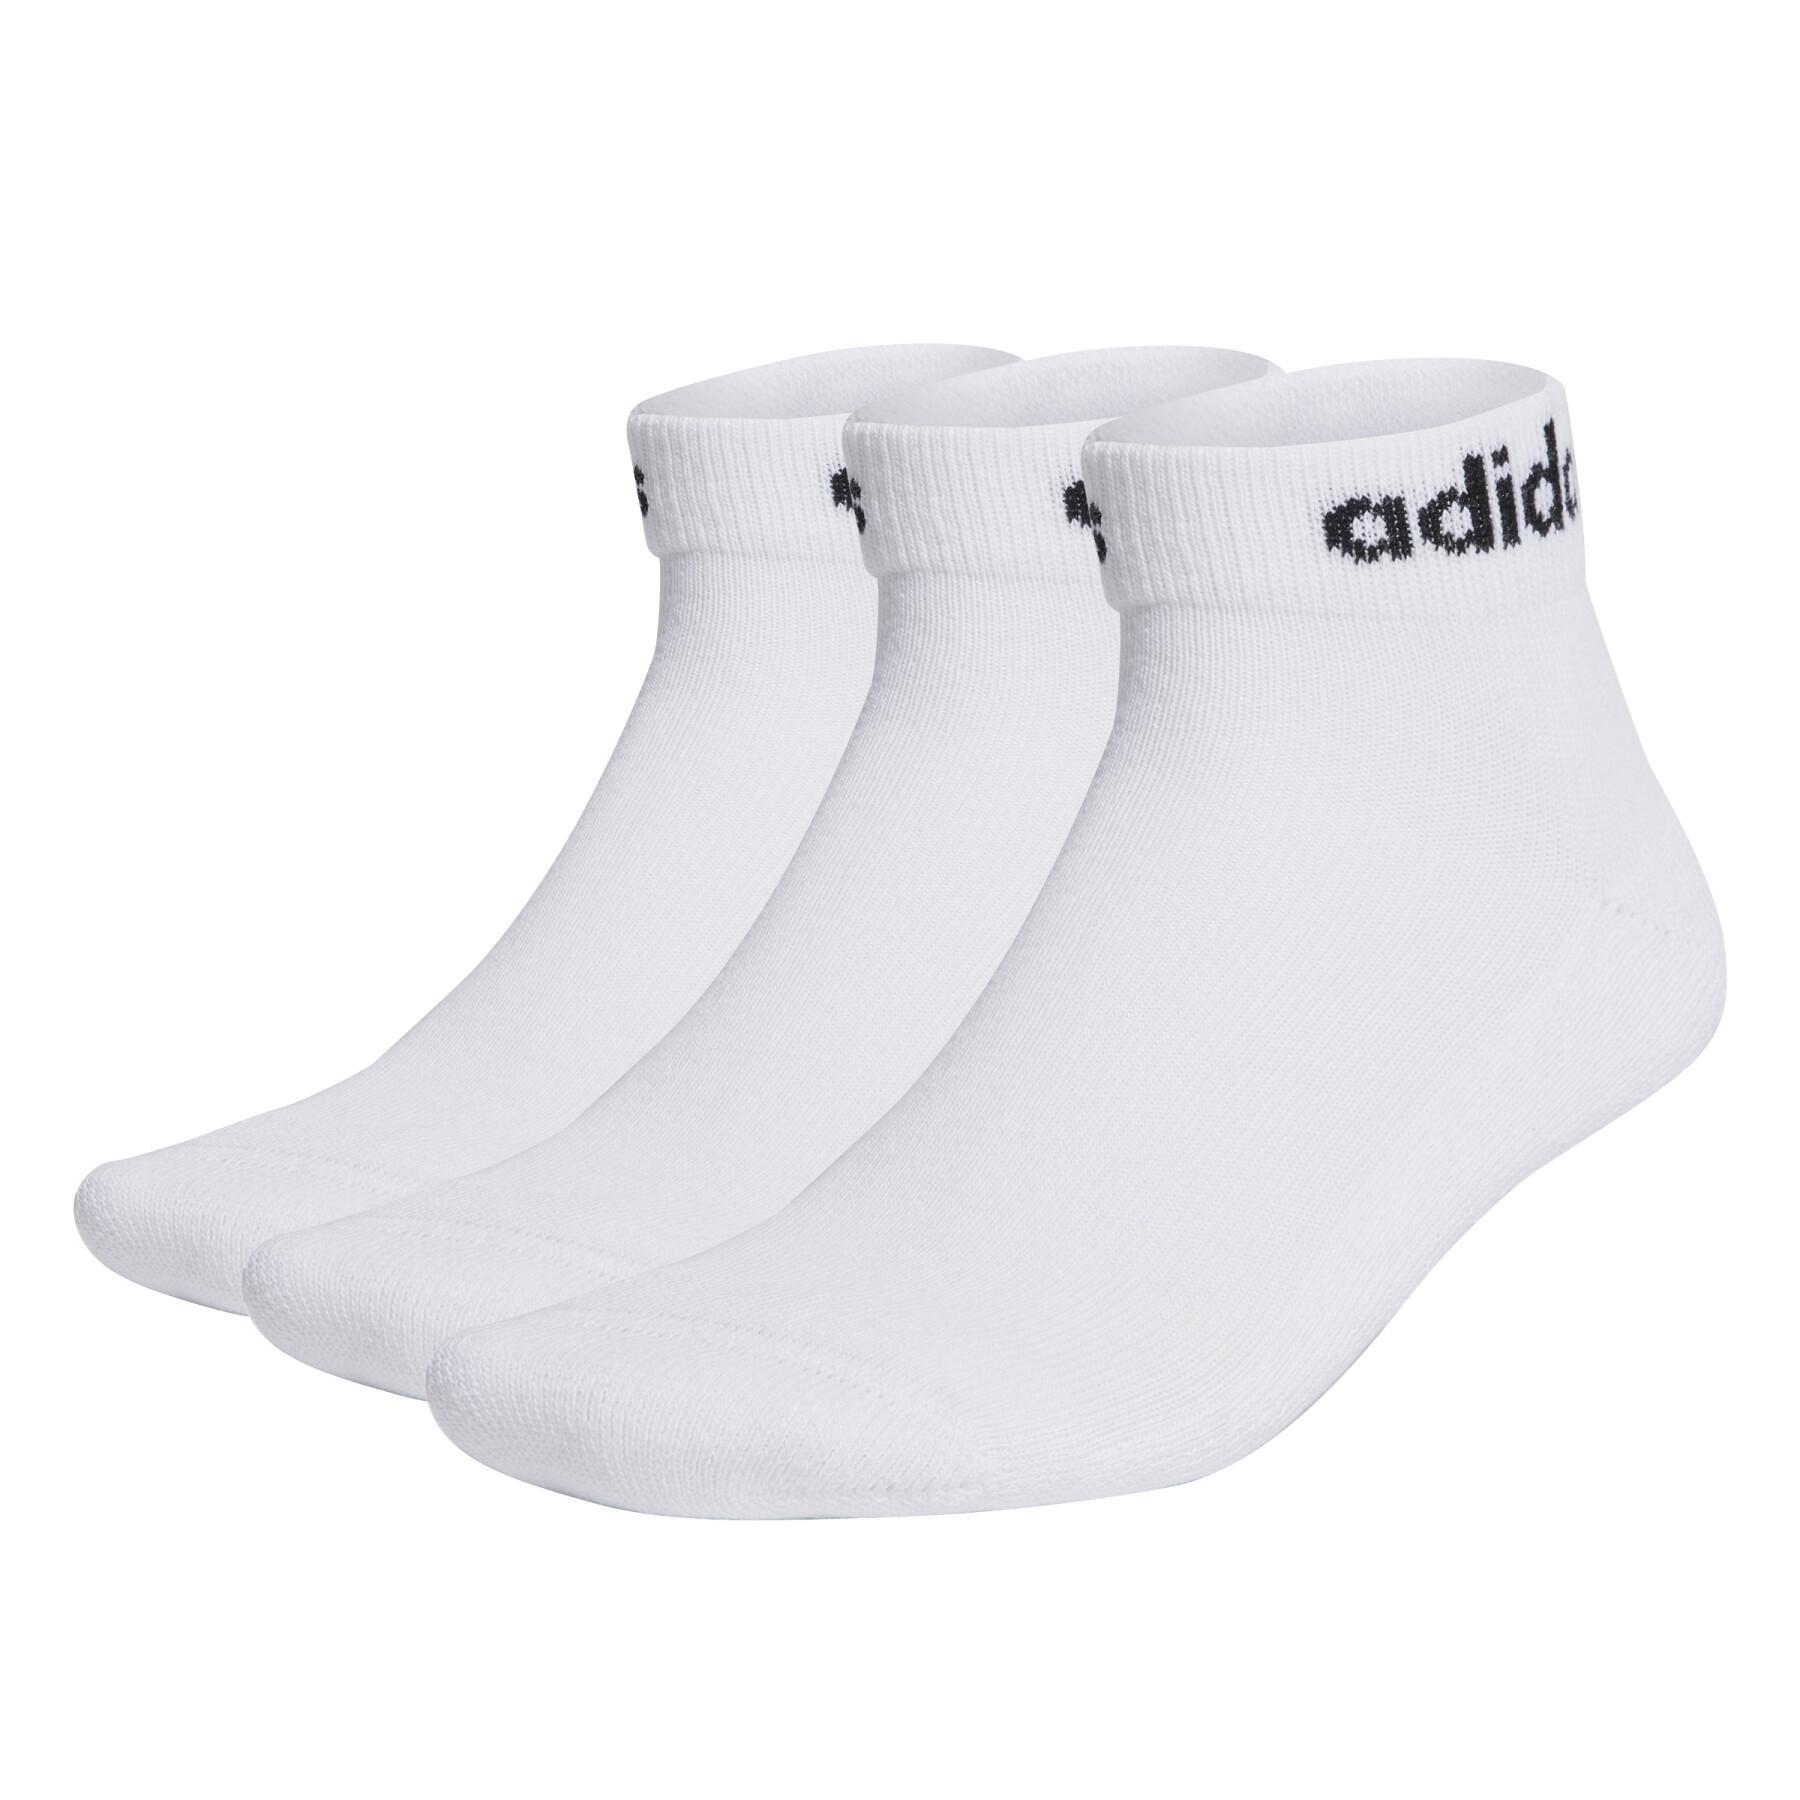 Children's socks adidas (x3)